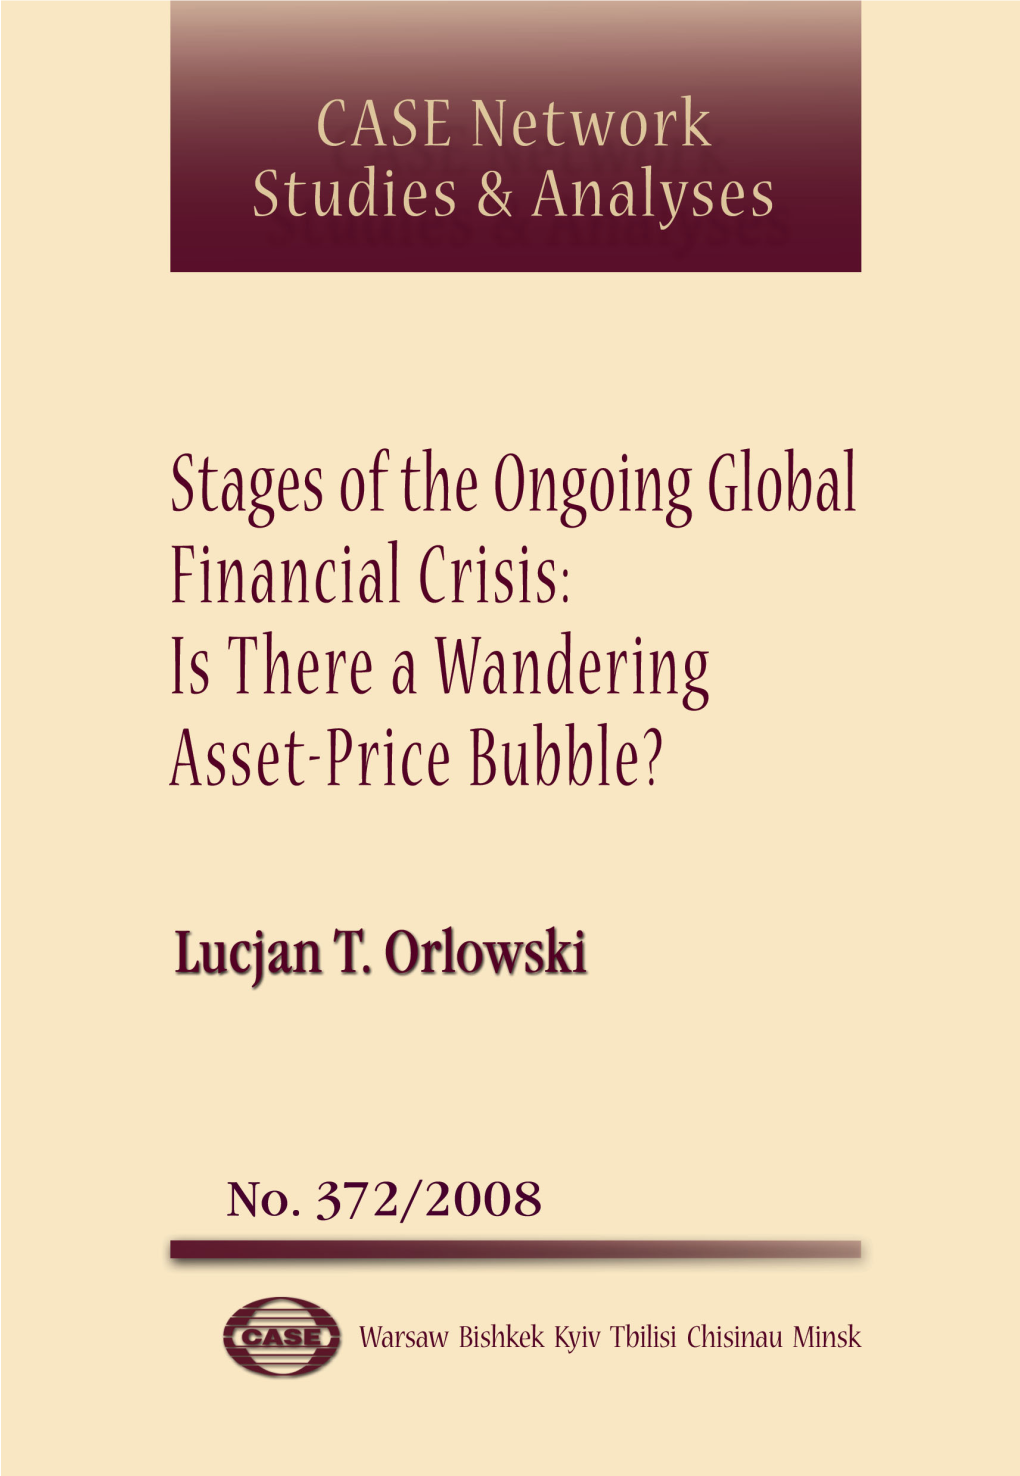 II. Origins of the Current Financial Crisis